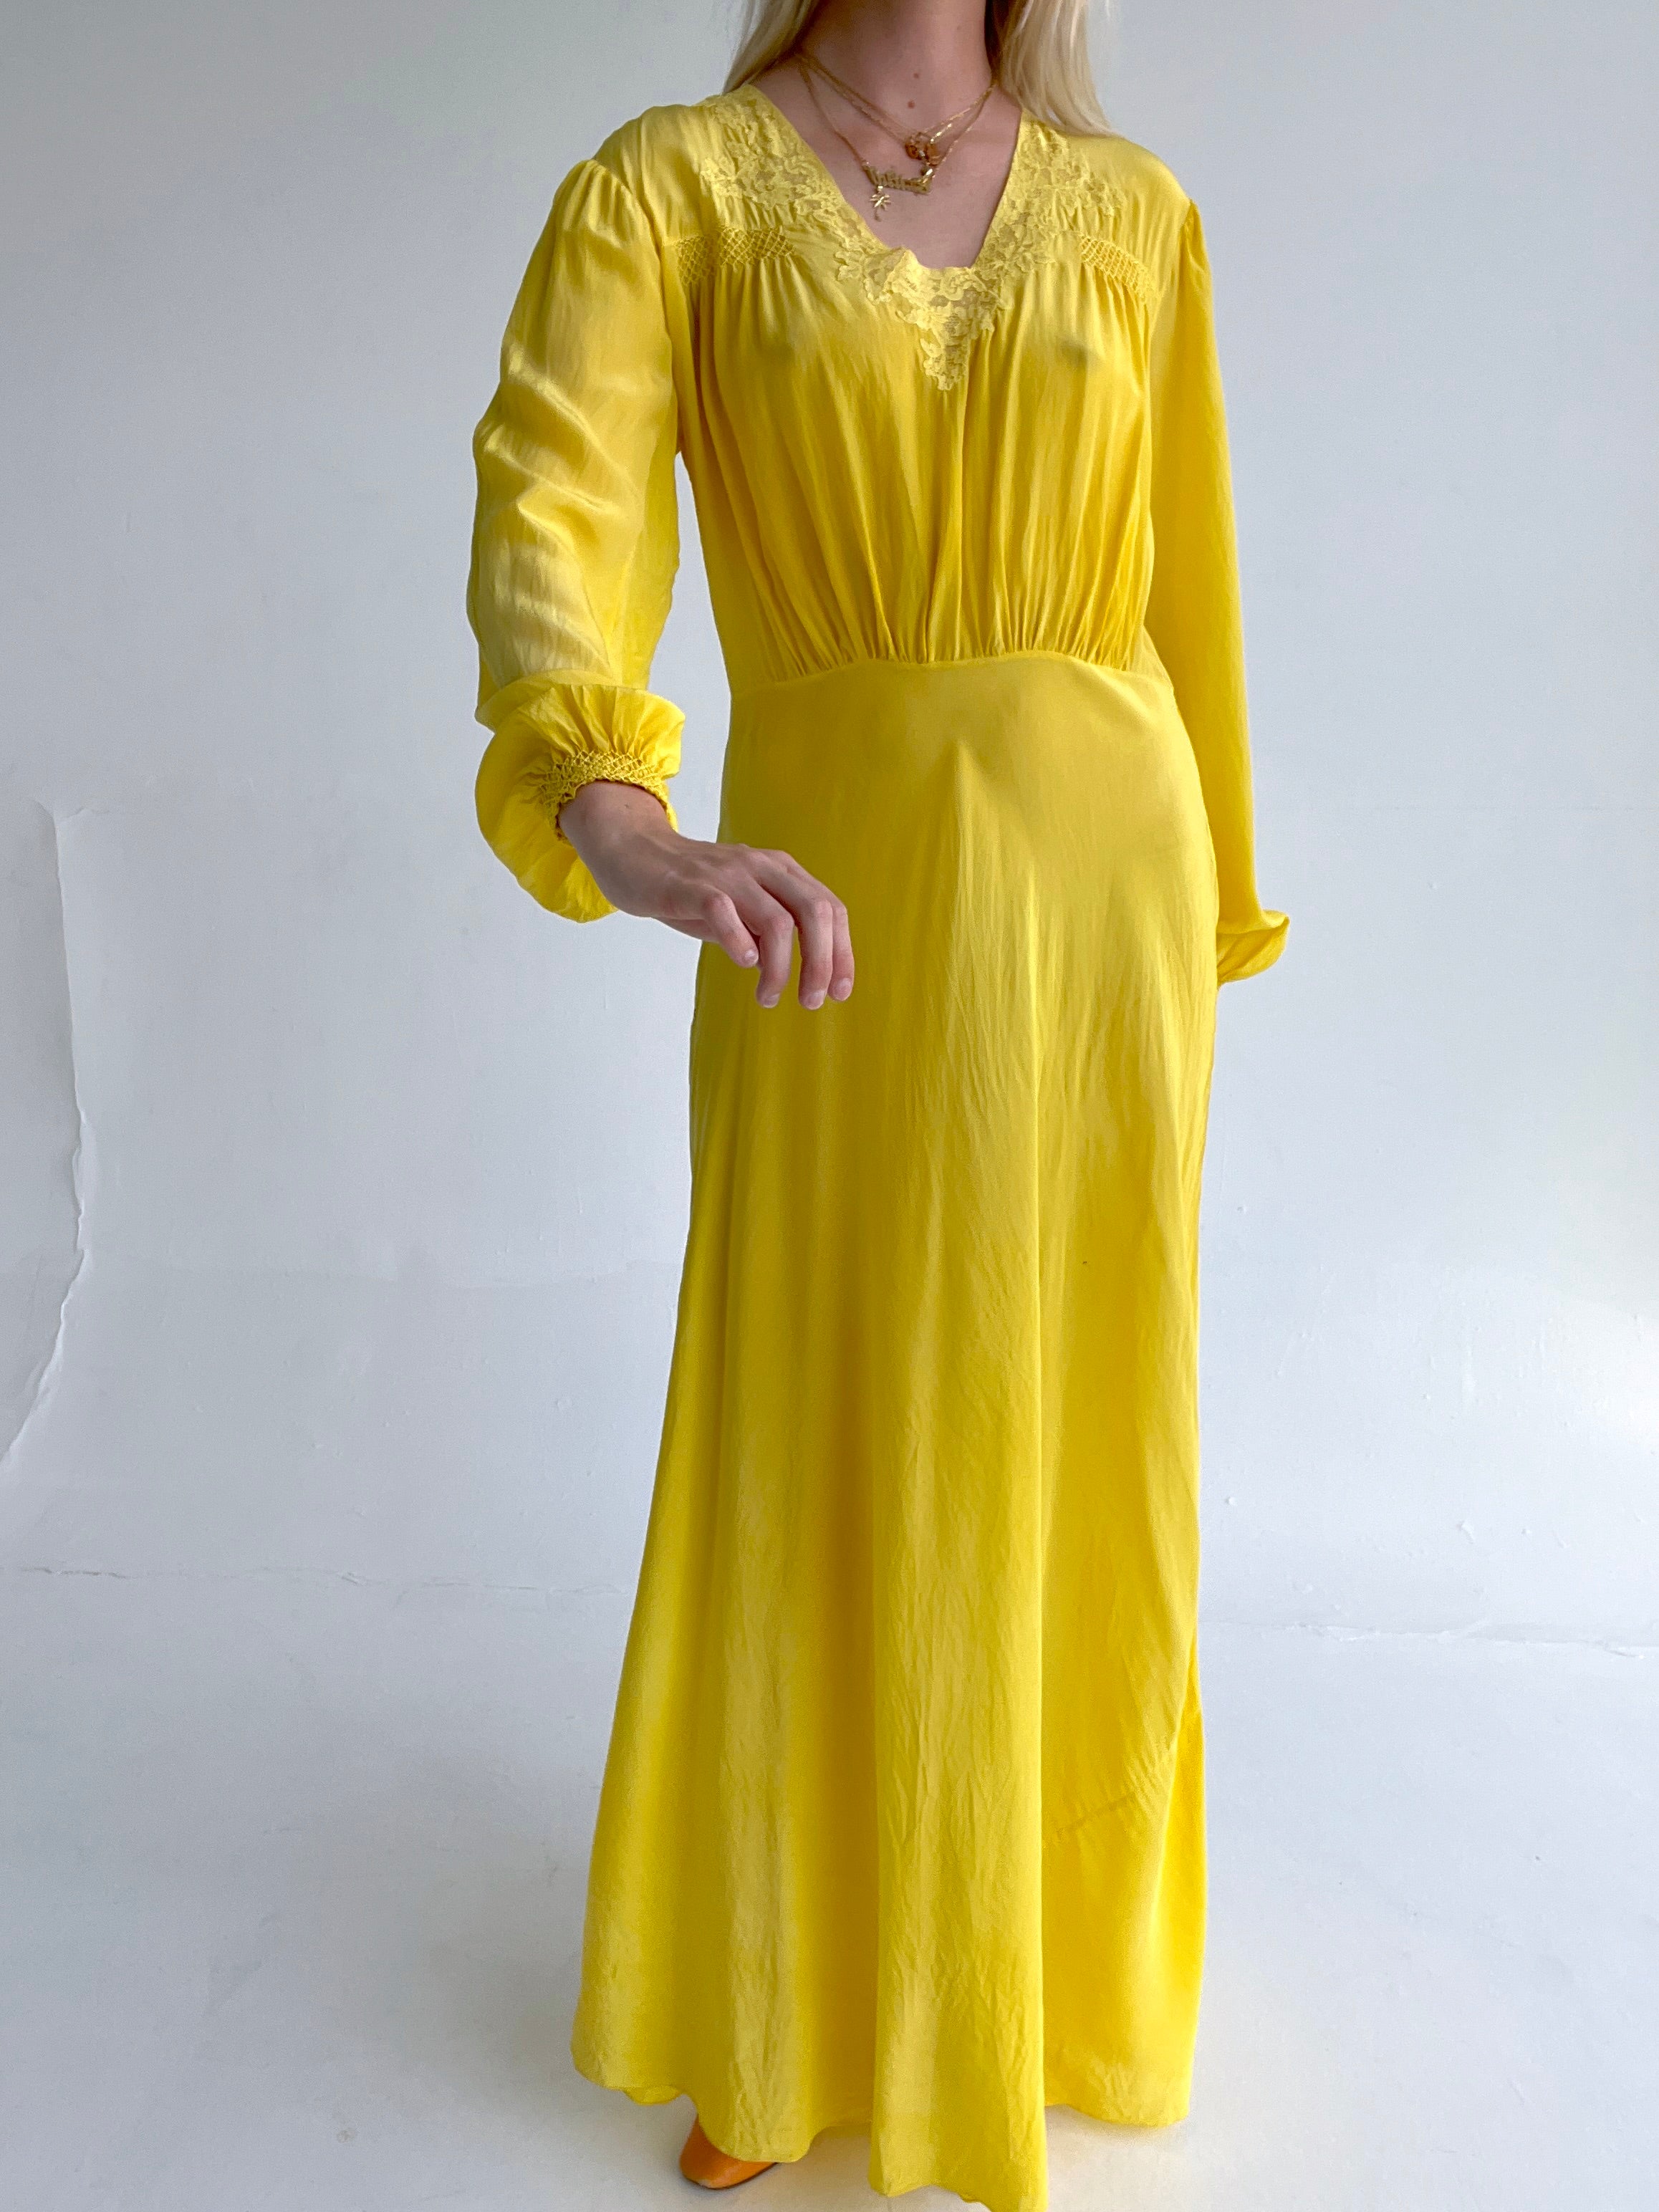 Hand Dyed Lemon Yellow Silk Long Sleeve Dress